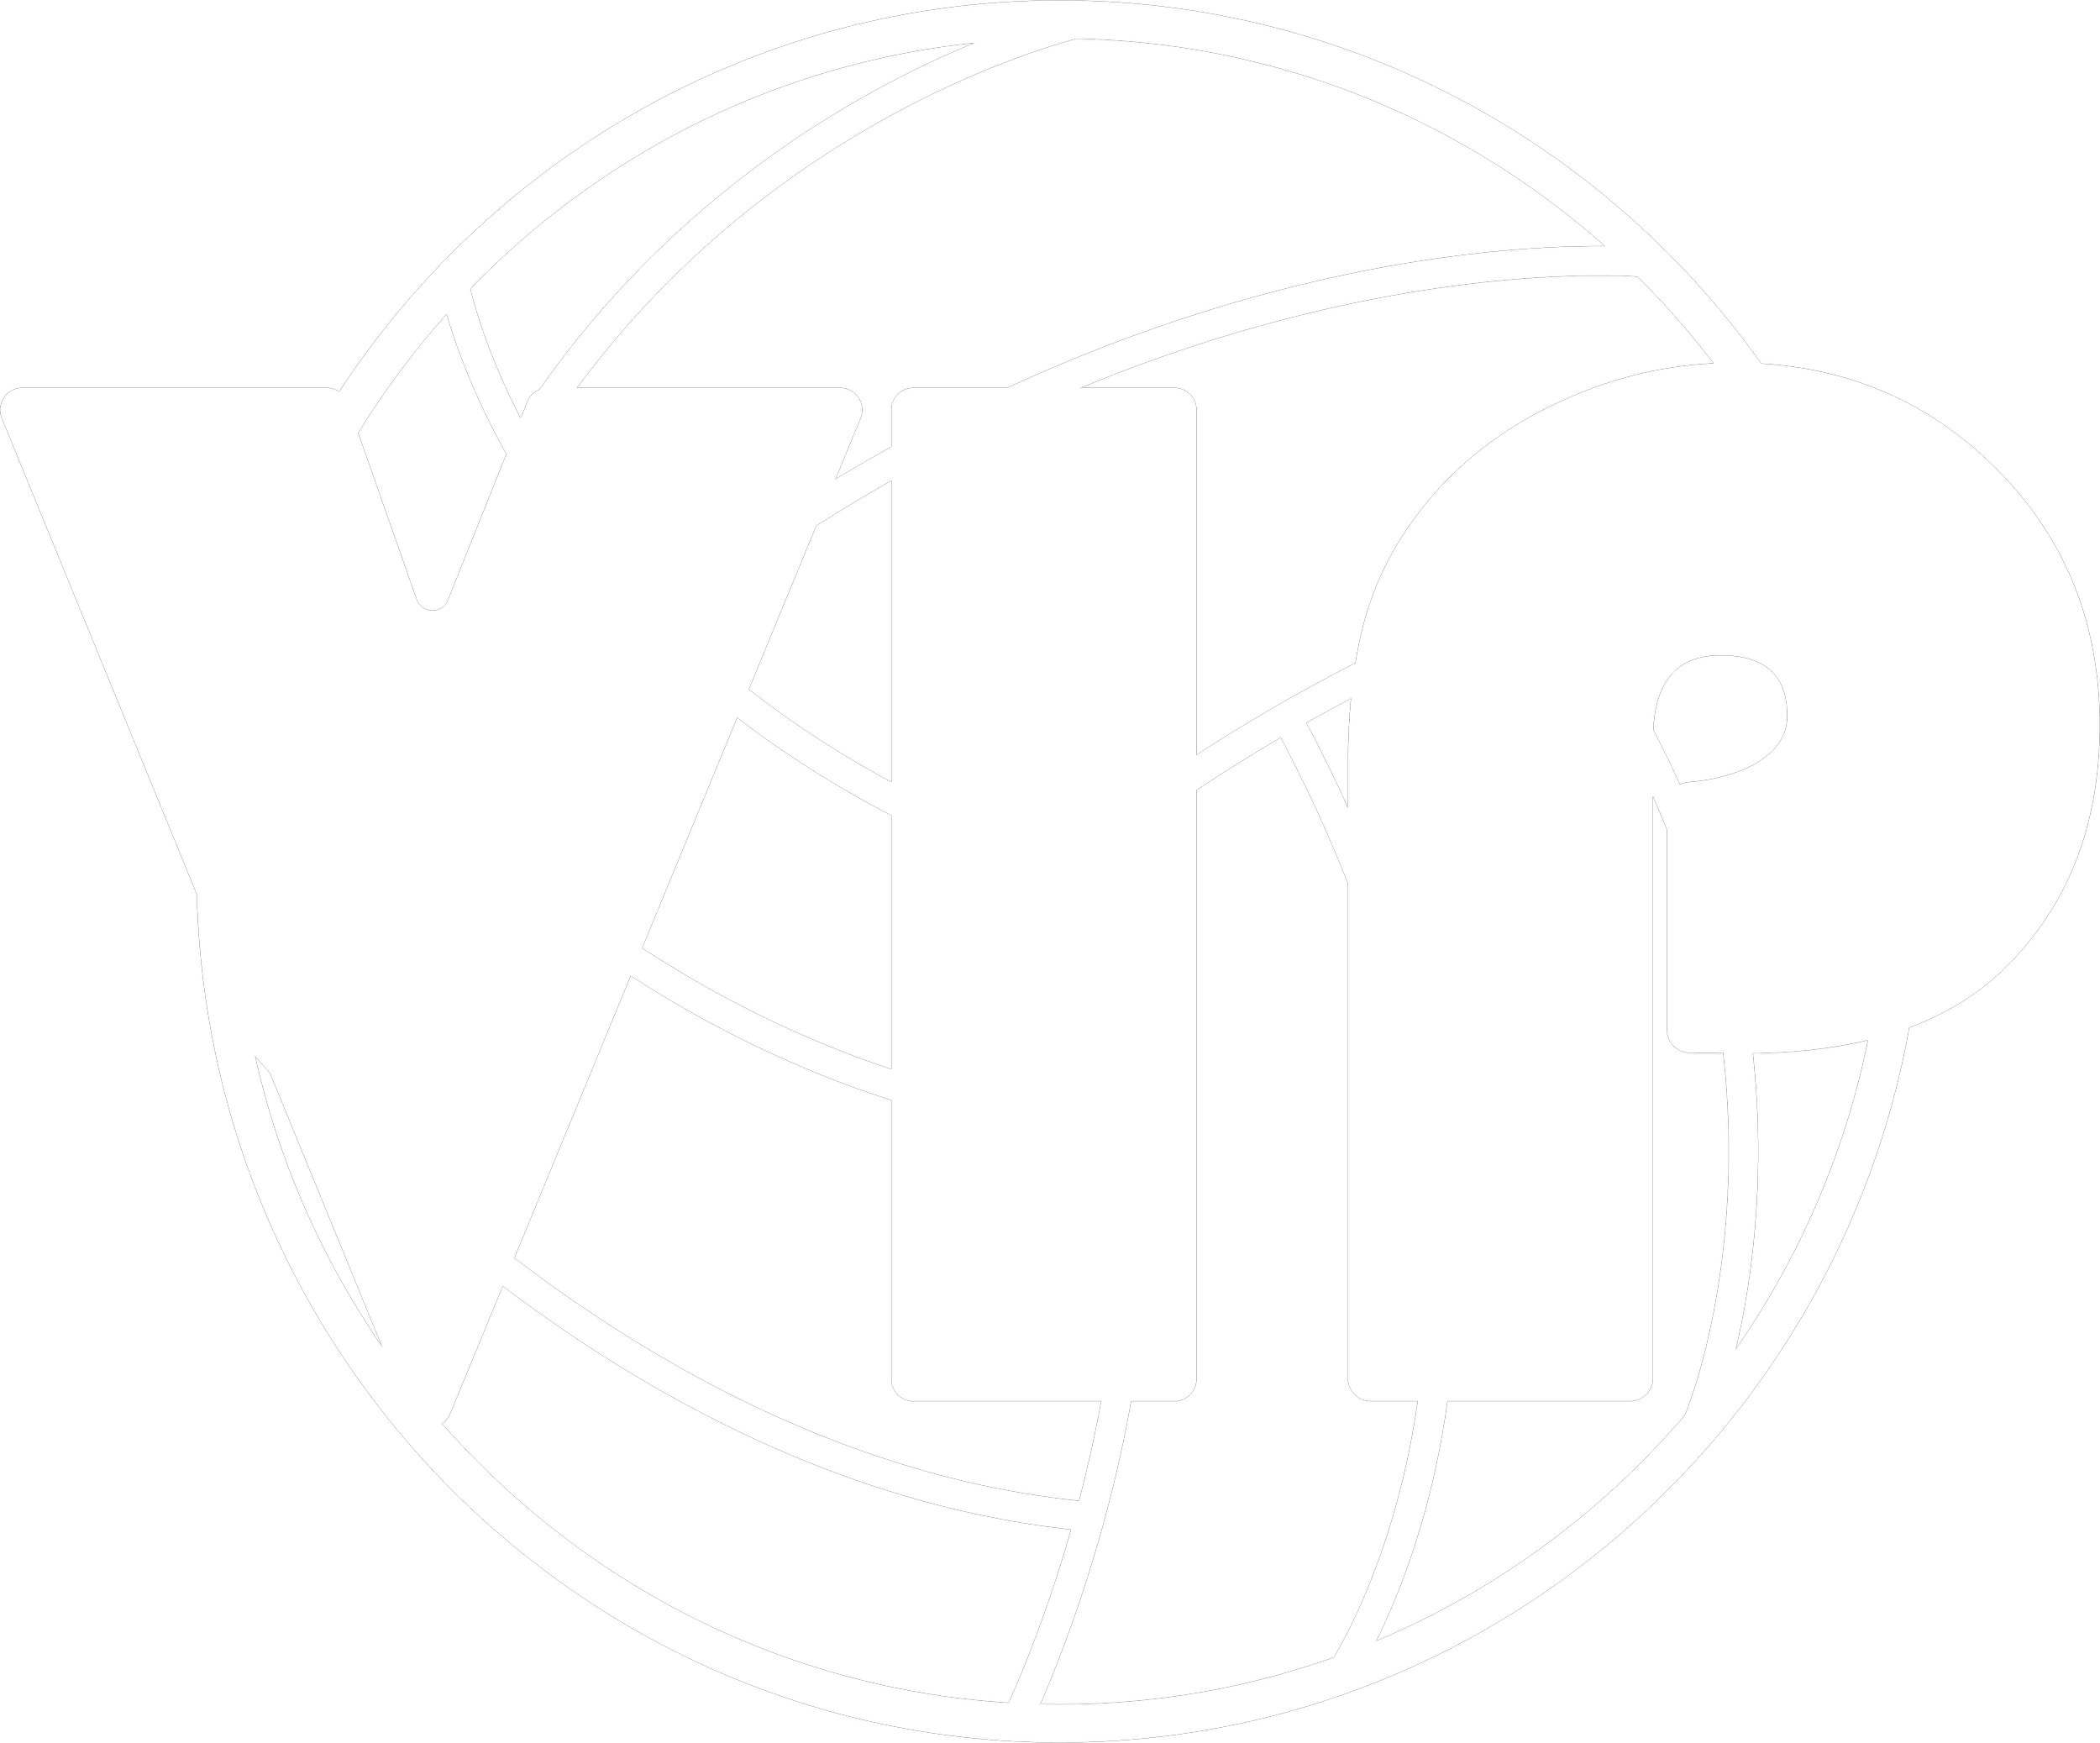 VIP Volleyball